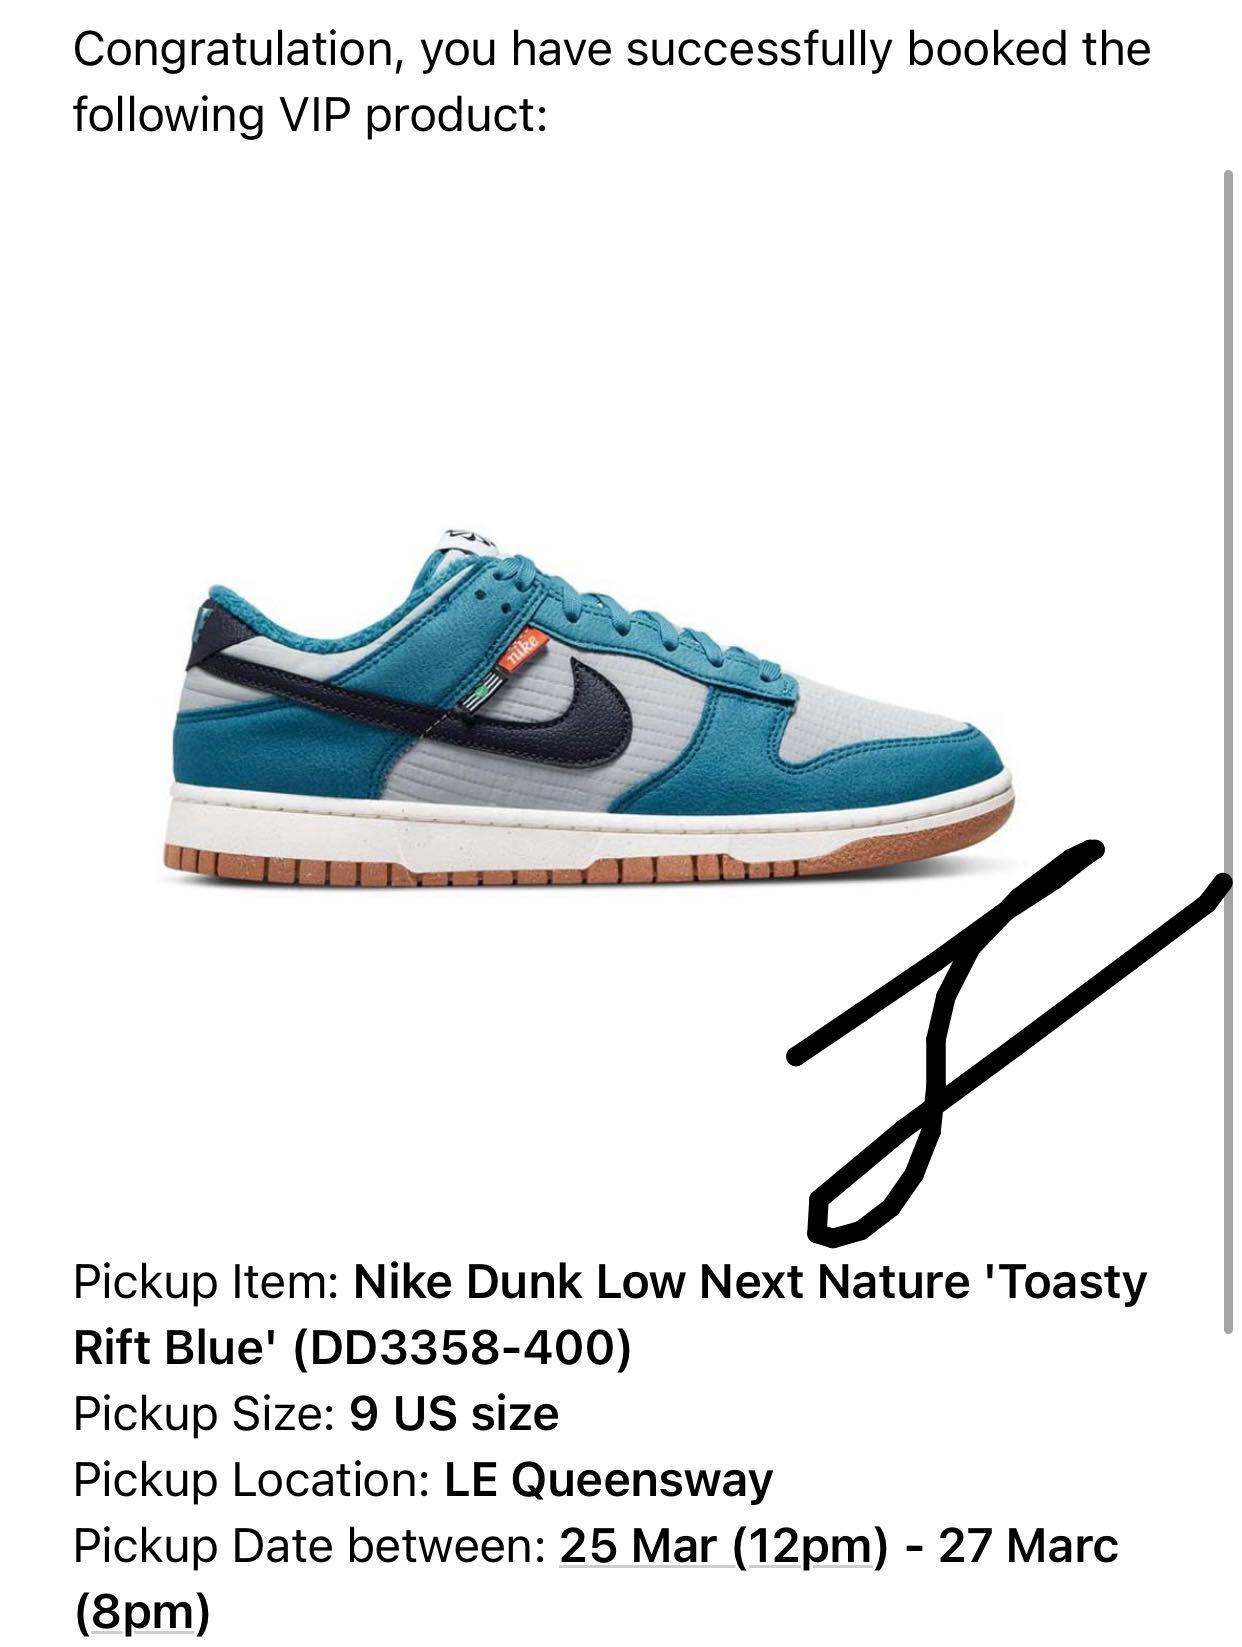 Nike Dunk Low Toasty Rift Blue DD3358-400